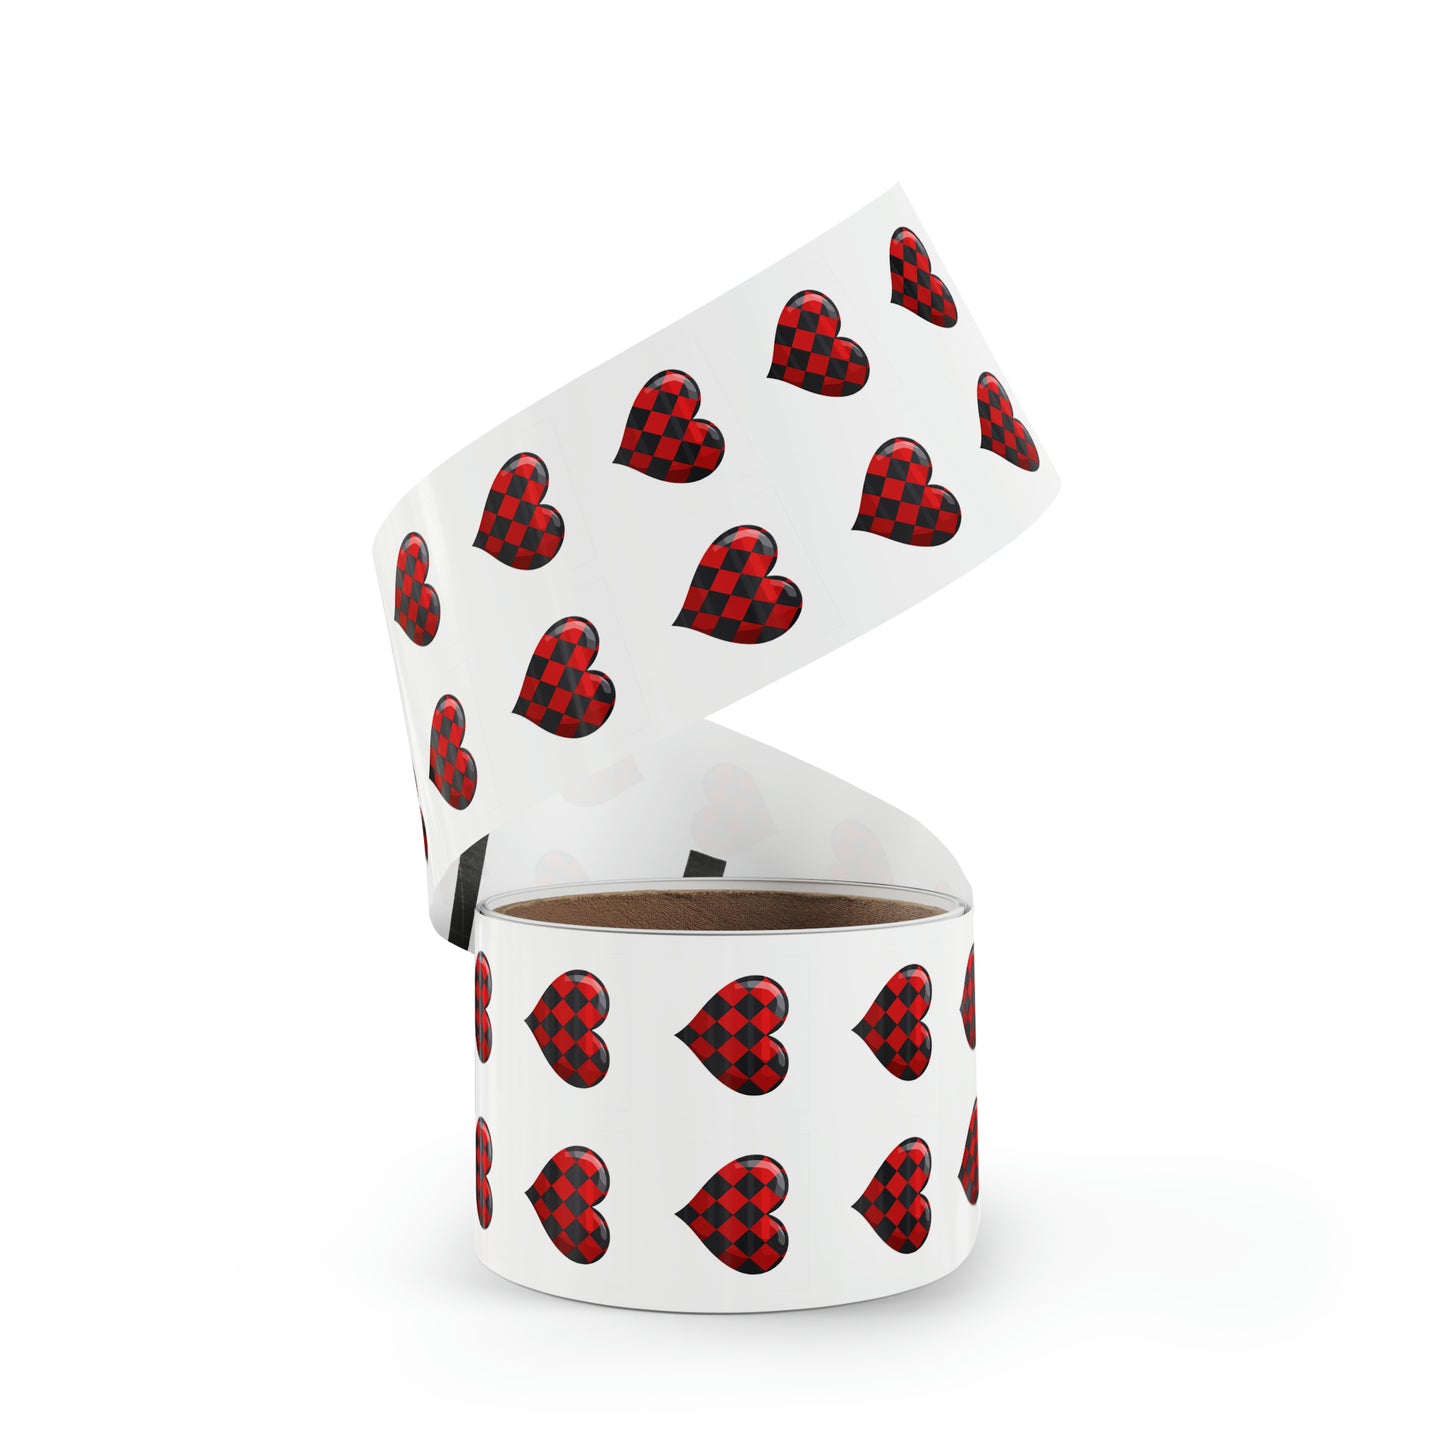 Valentine's heart shape Square Sticker Label Rolls